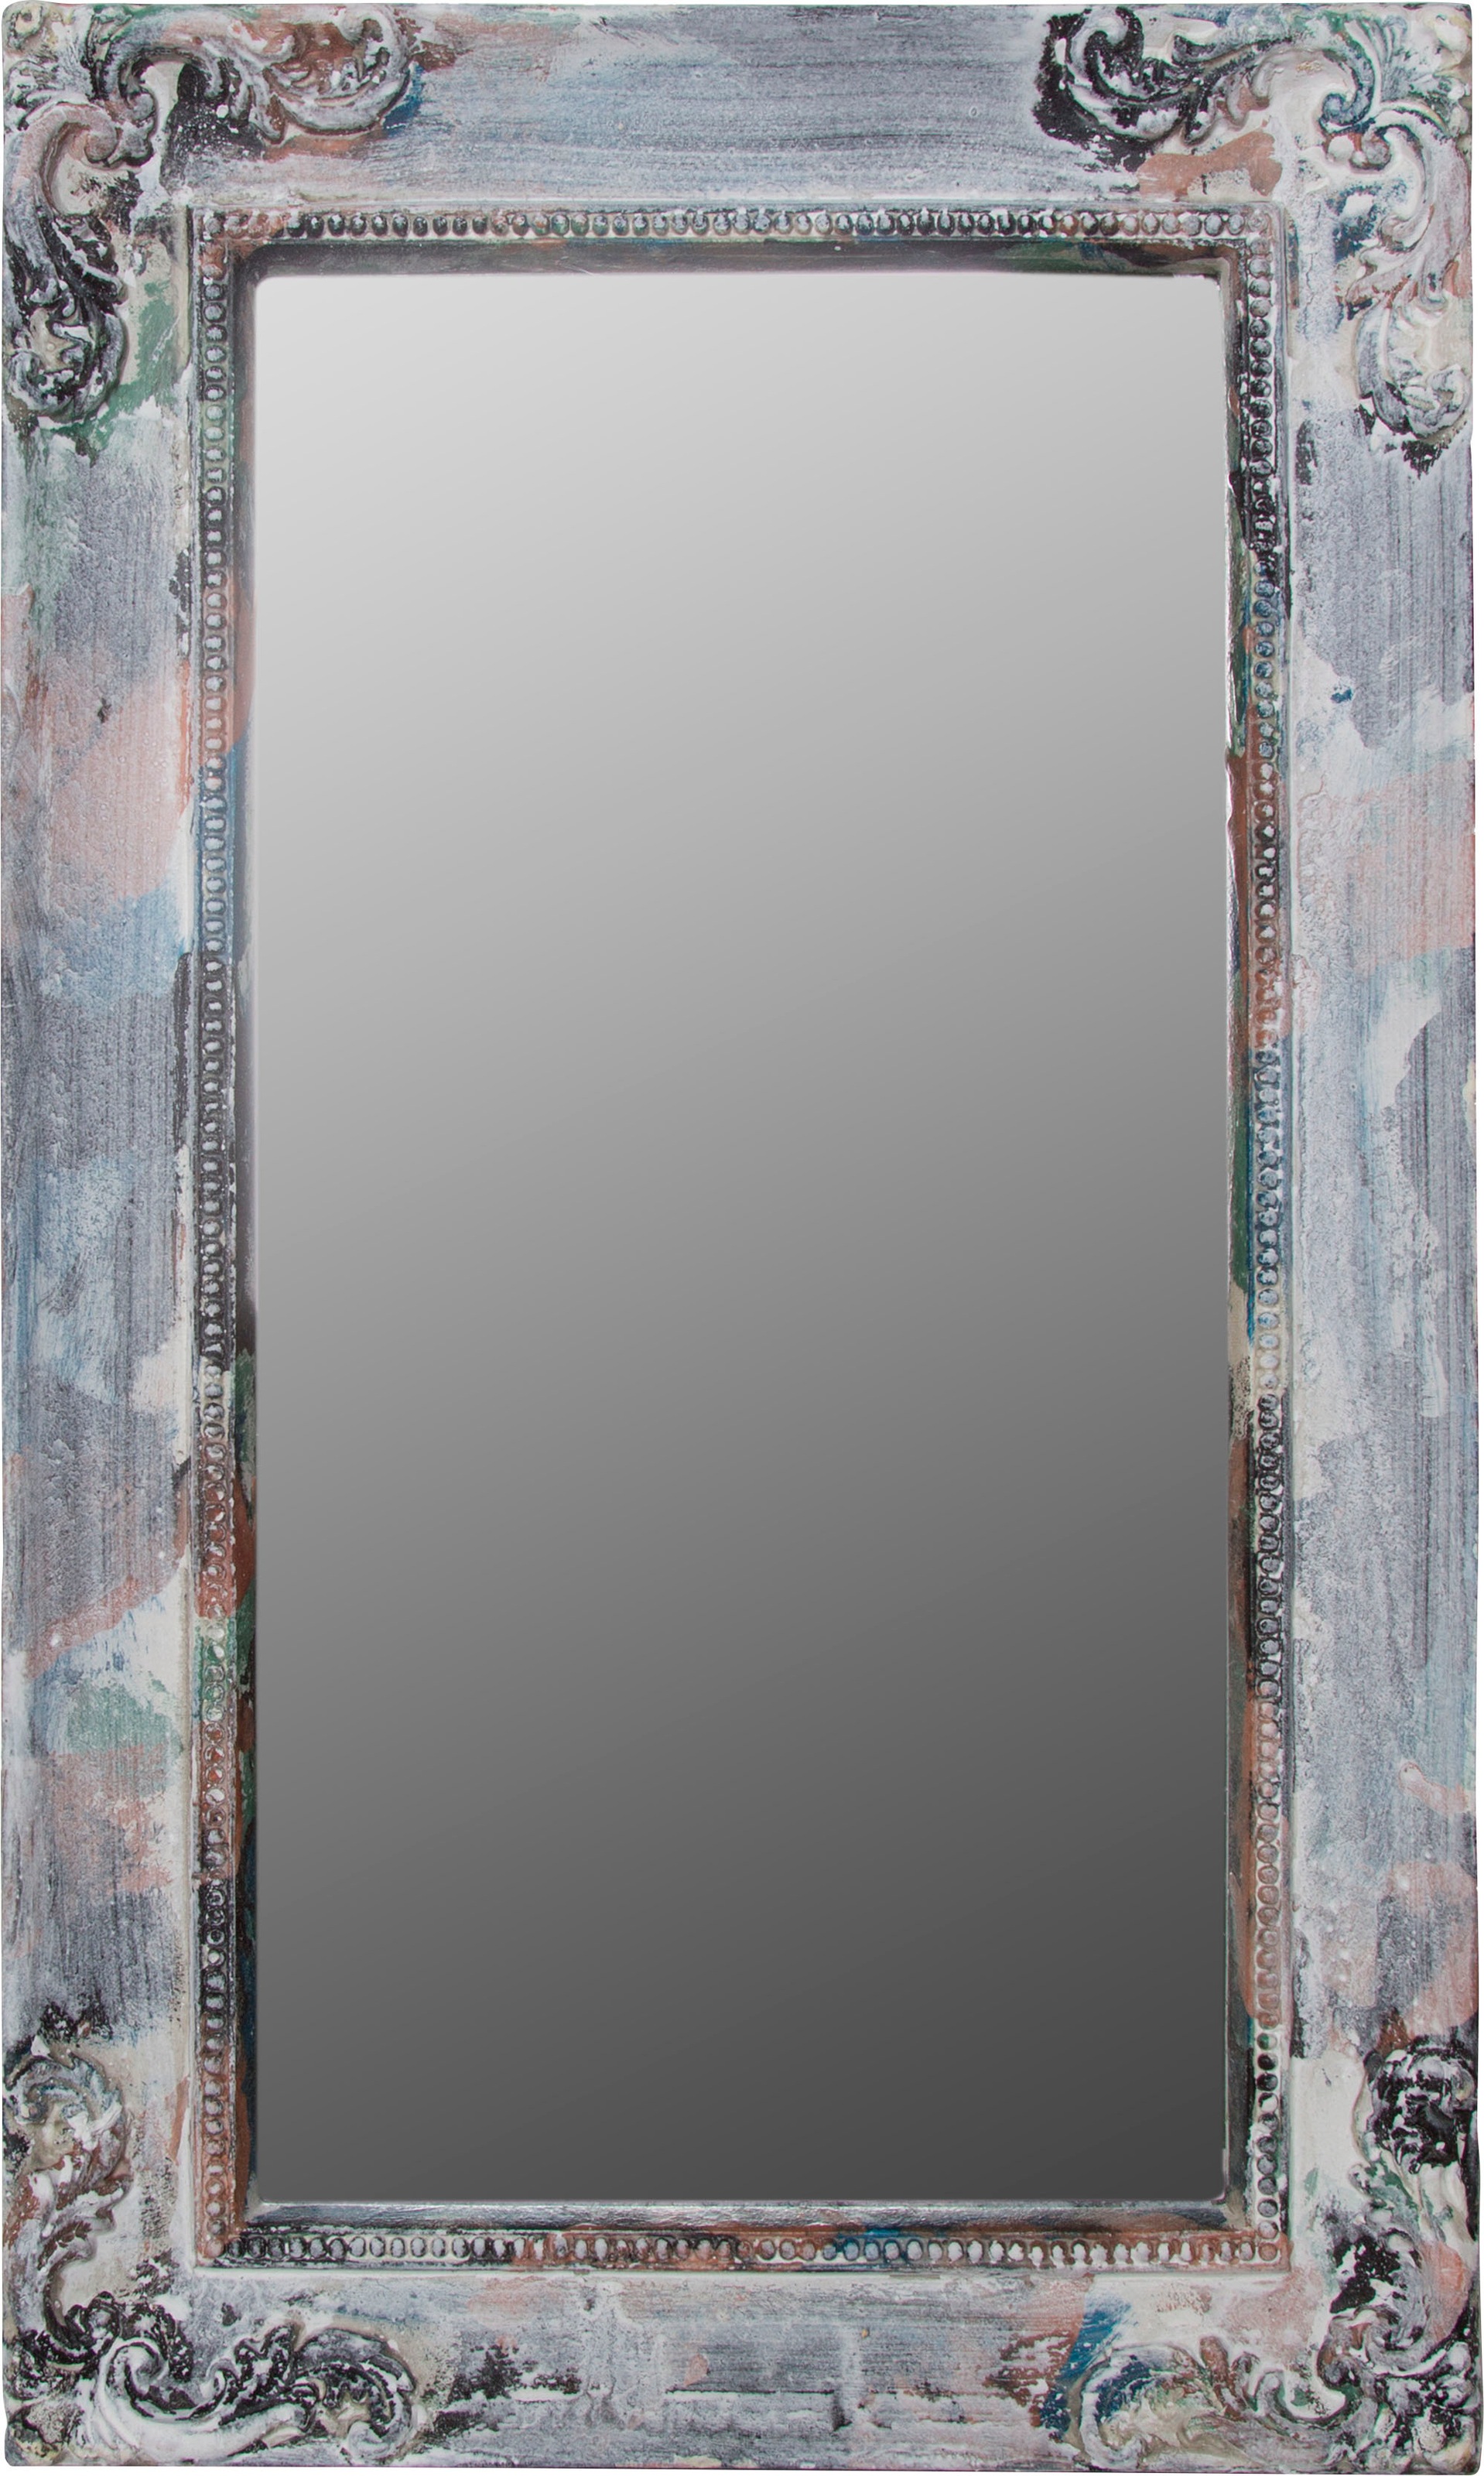 Myflair Möbel & Accessoires Wandspiegel »Manja«, (1 St.), rechteckig, verzierter Rahmen aus Holz, Shabby Optik